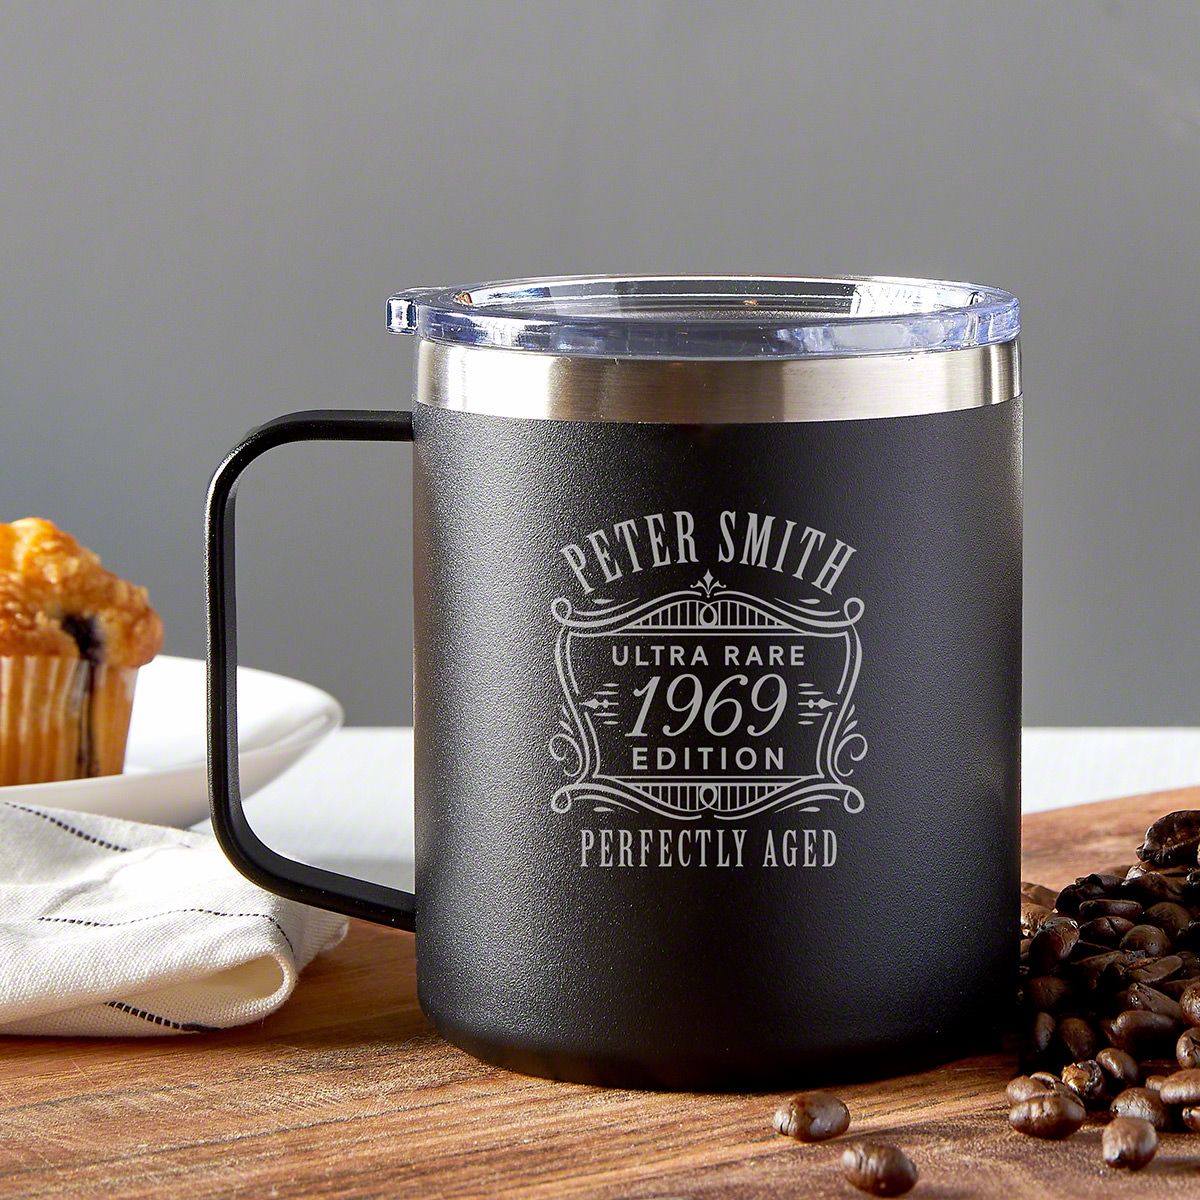 https://images.homewetbar.com/media/catalog/product/u/l/ultra-rare-black-custom-coffee-mug-14-oz-p_10206.jpg?store=default&image-type=image